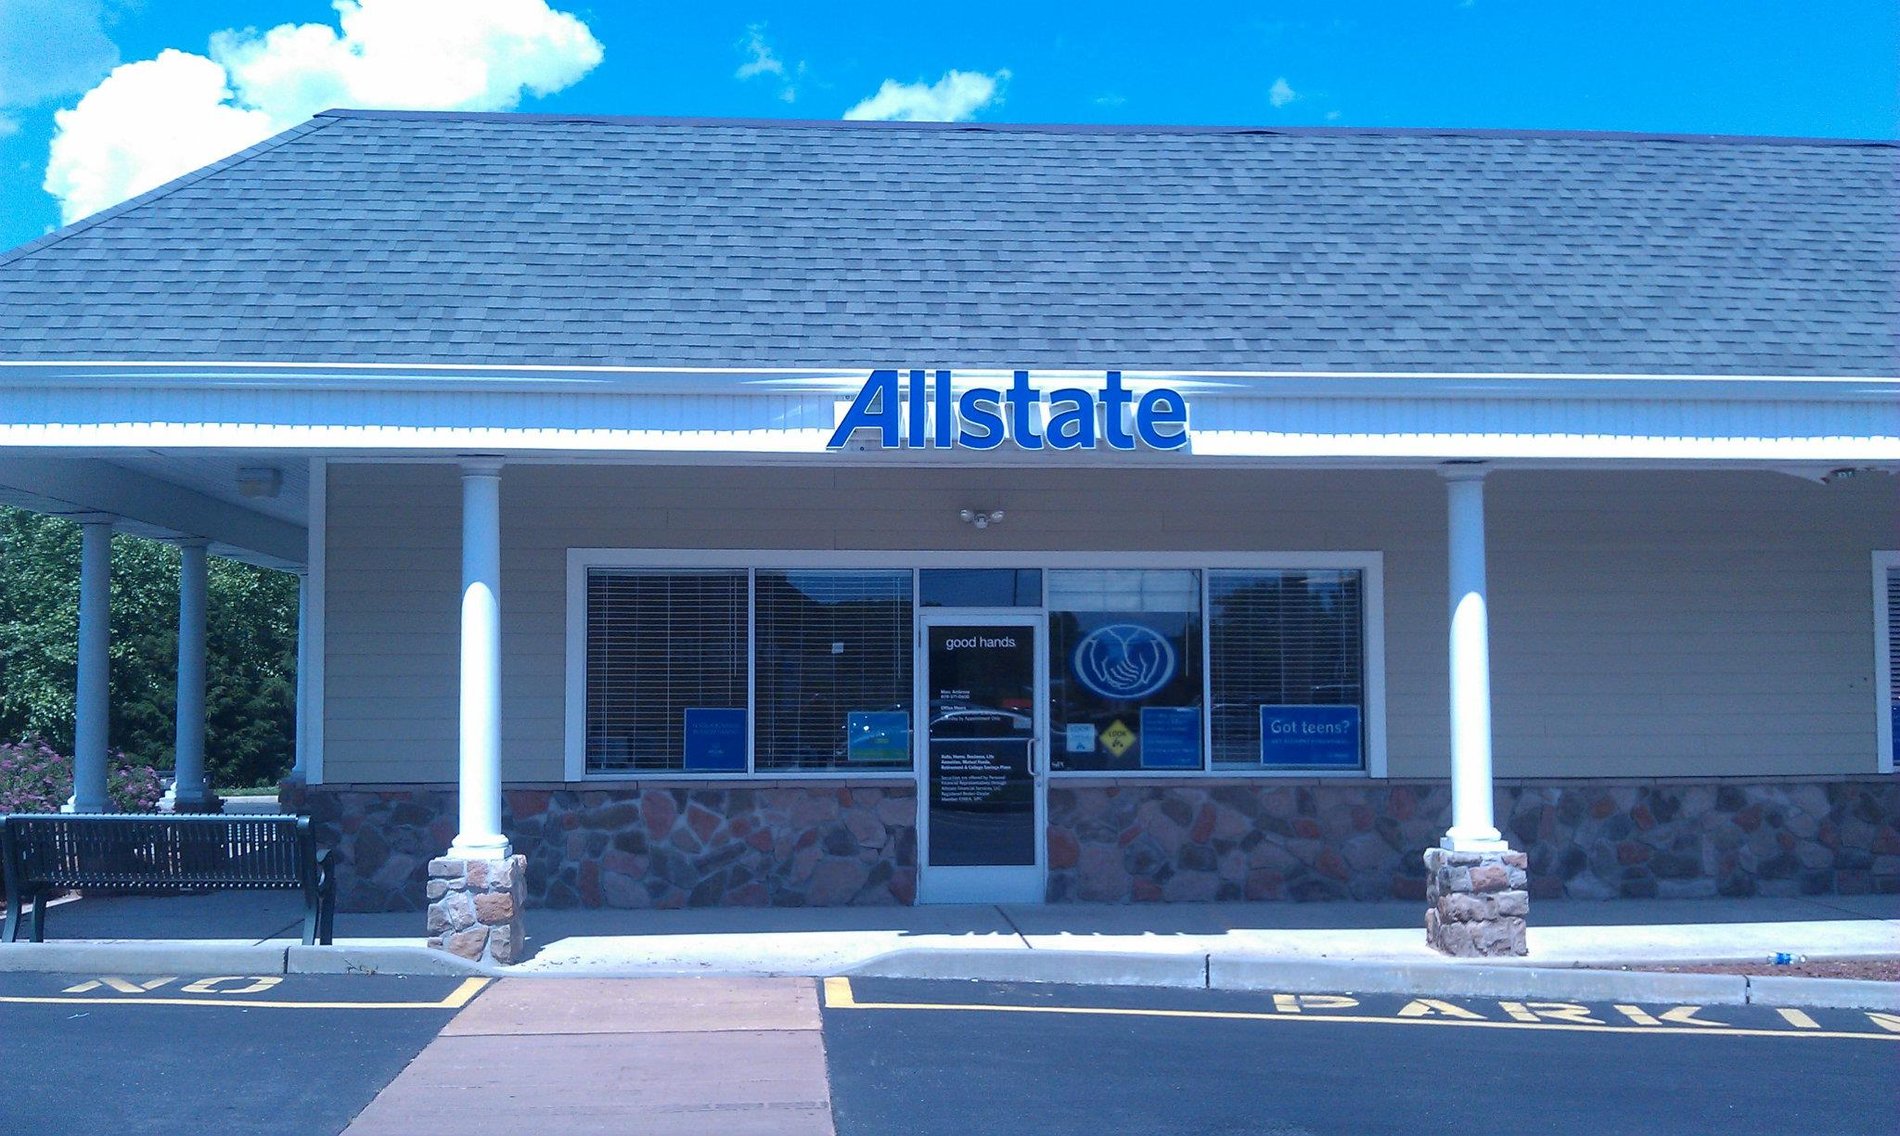 Allstate Car Insurance in East Windsor, NJ Marc Ambrose